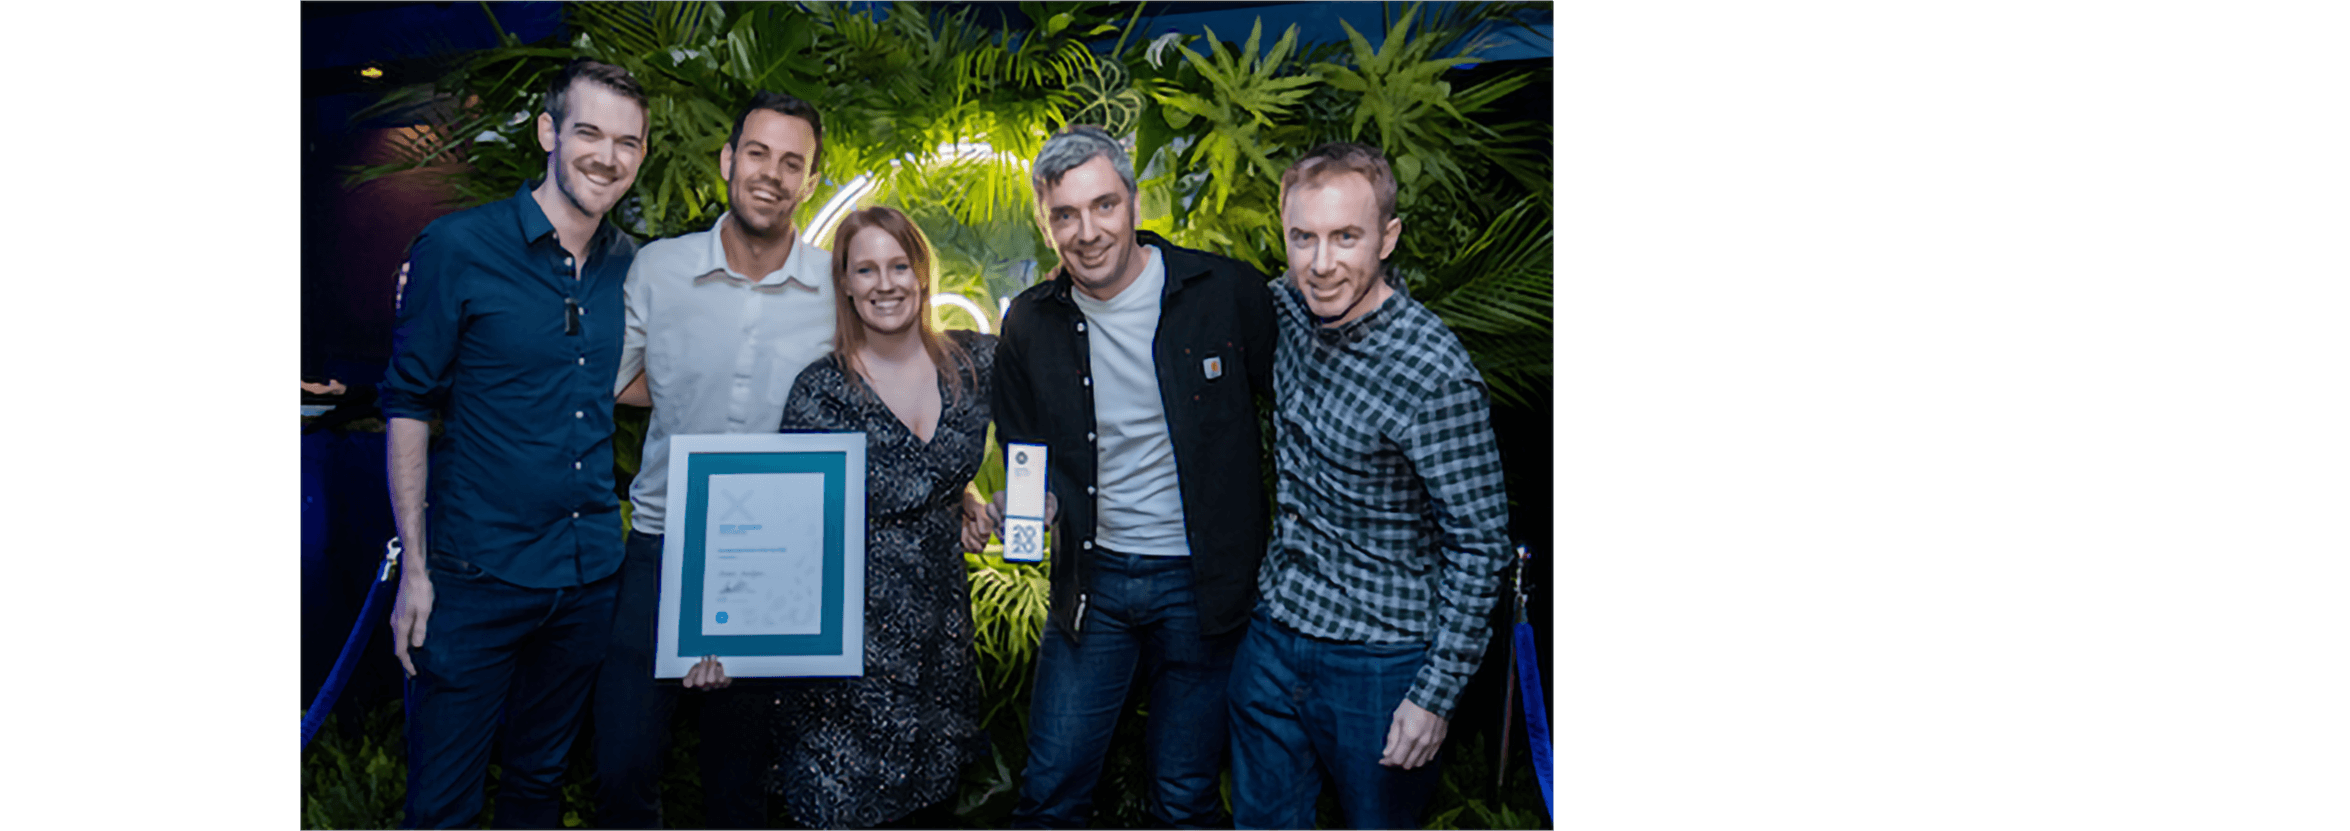 Members of the Xavier Analytics team celebrate winning the Emerging App of the Year award.